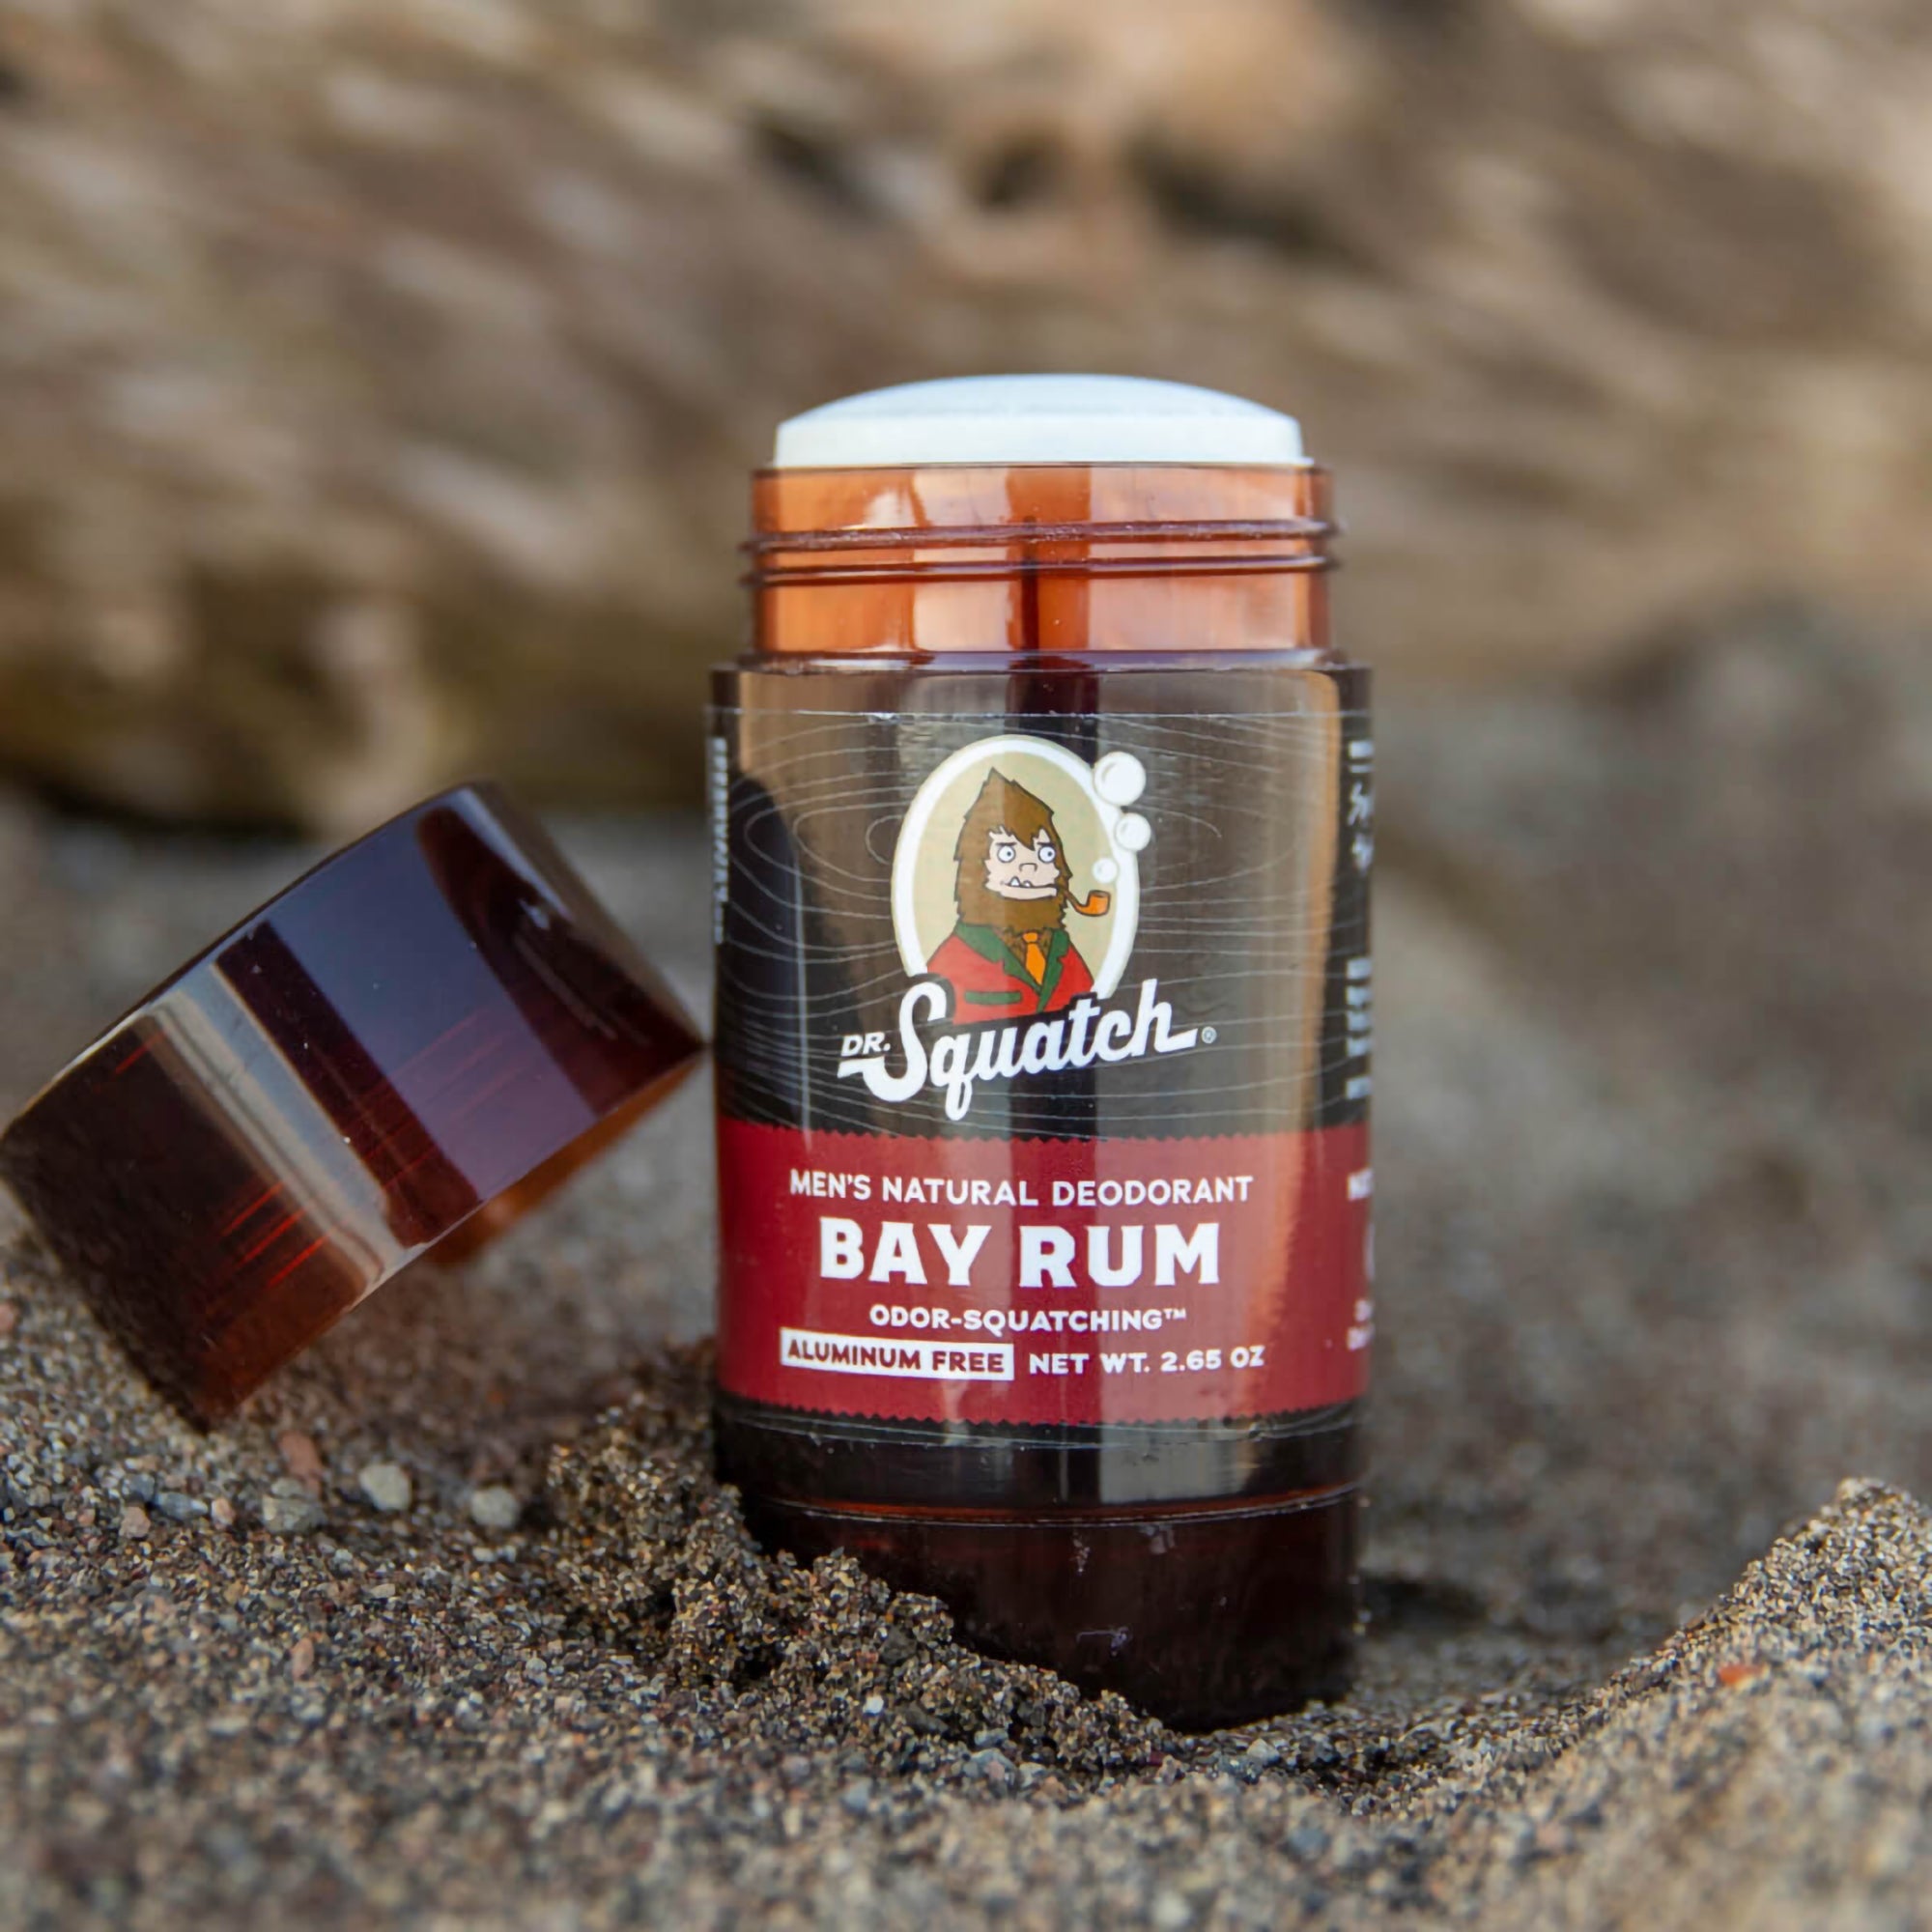 Dr. Squatch Bay Rum Deodorant / 2.6OZ